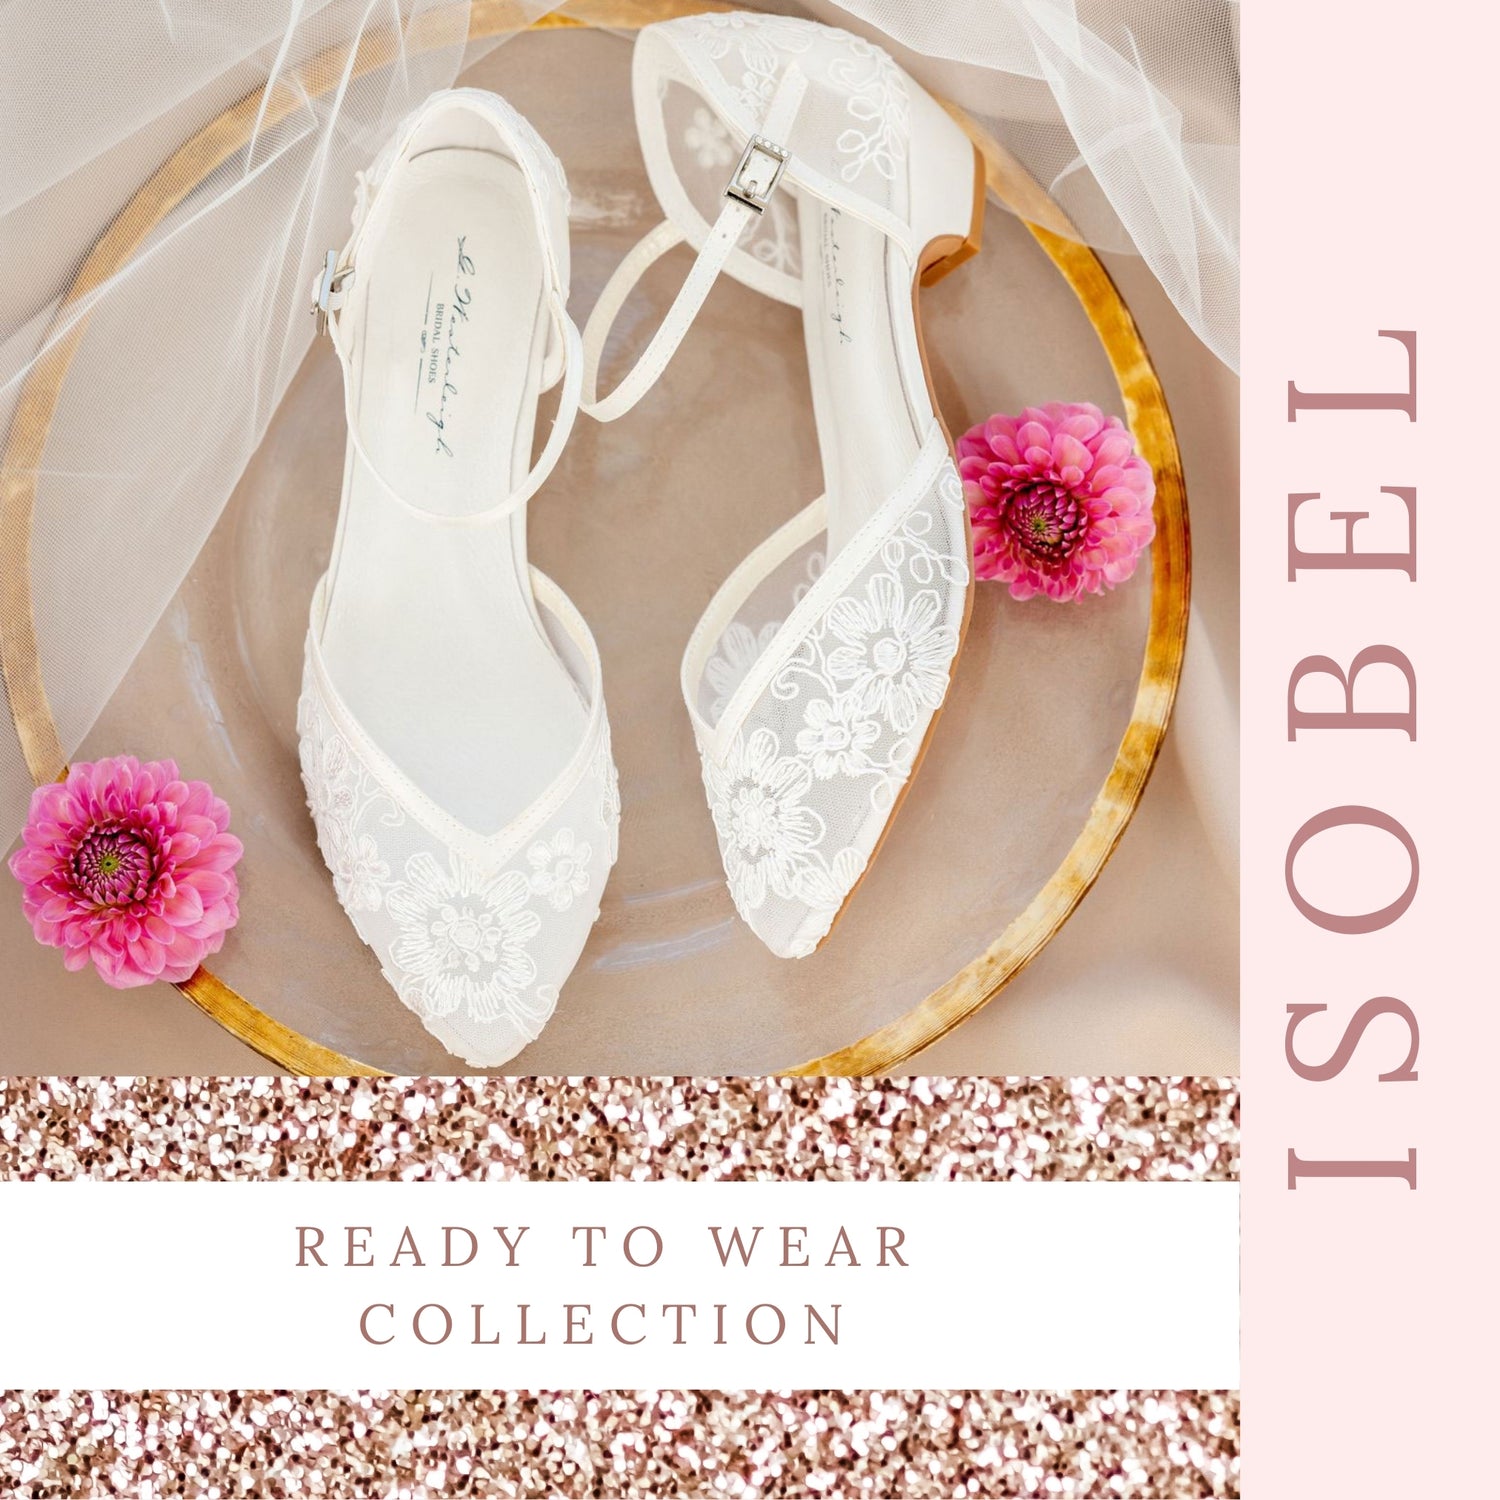 lace-wedding-shoes-block-heel